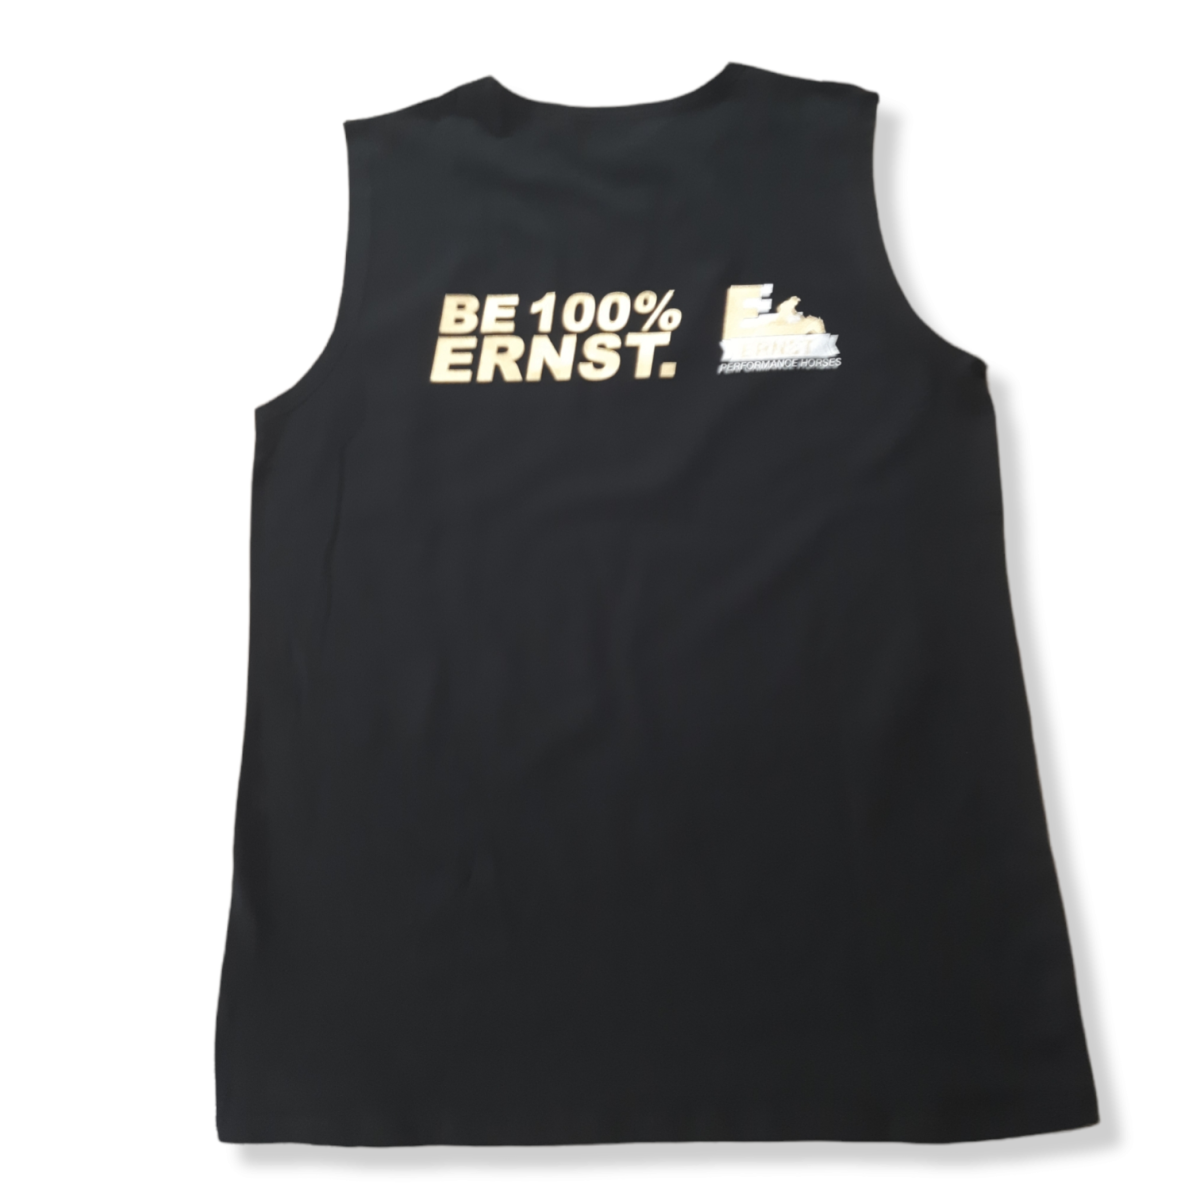 "BE 100% ERNST." Herren Tank Shirt